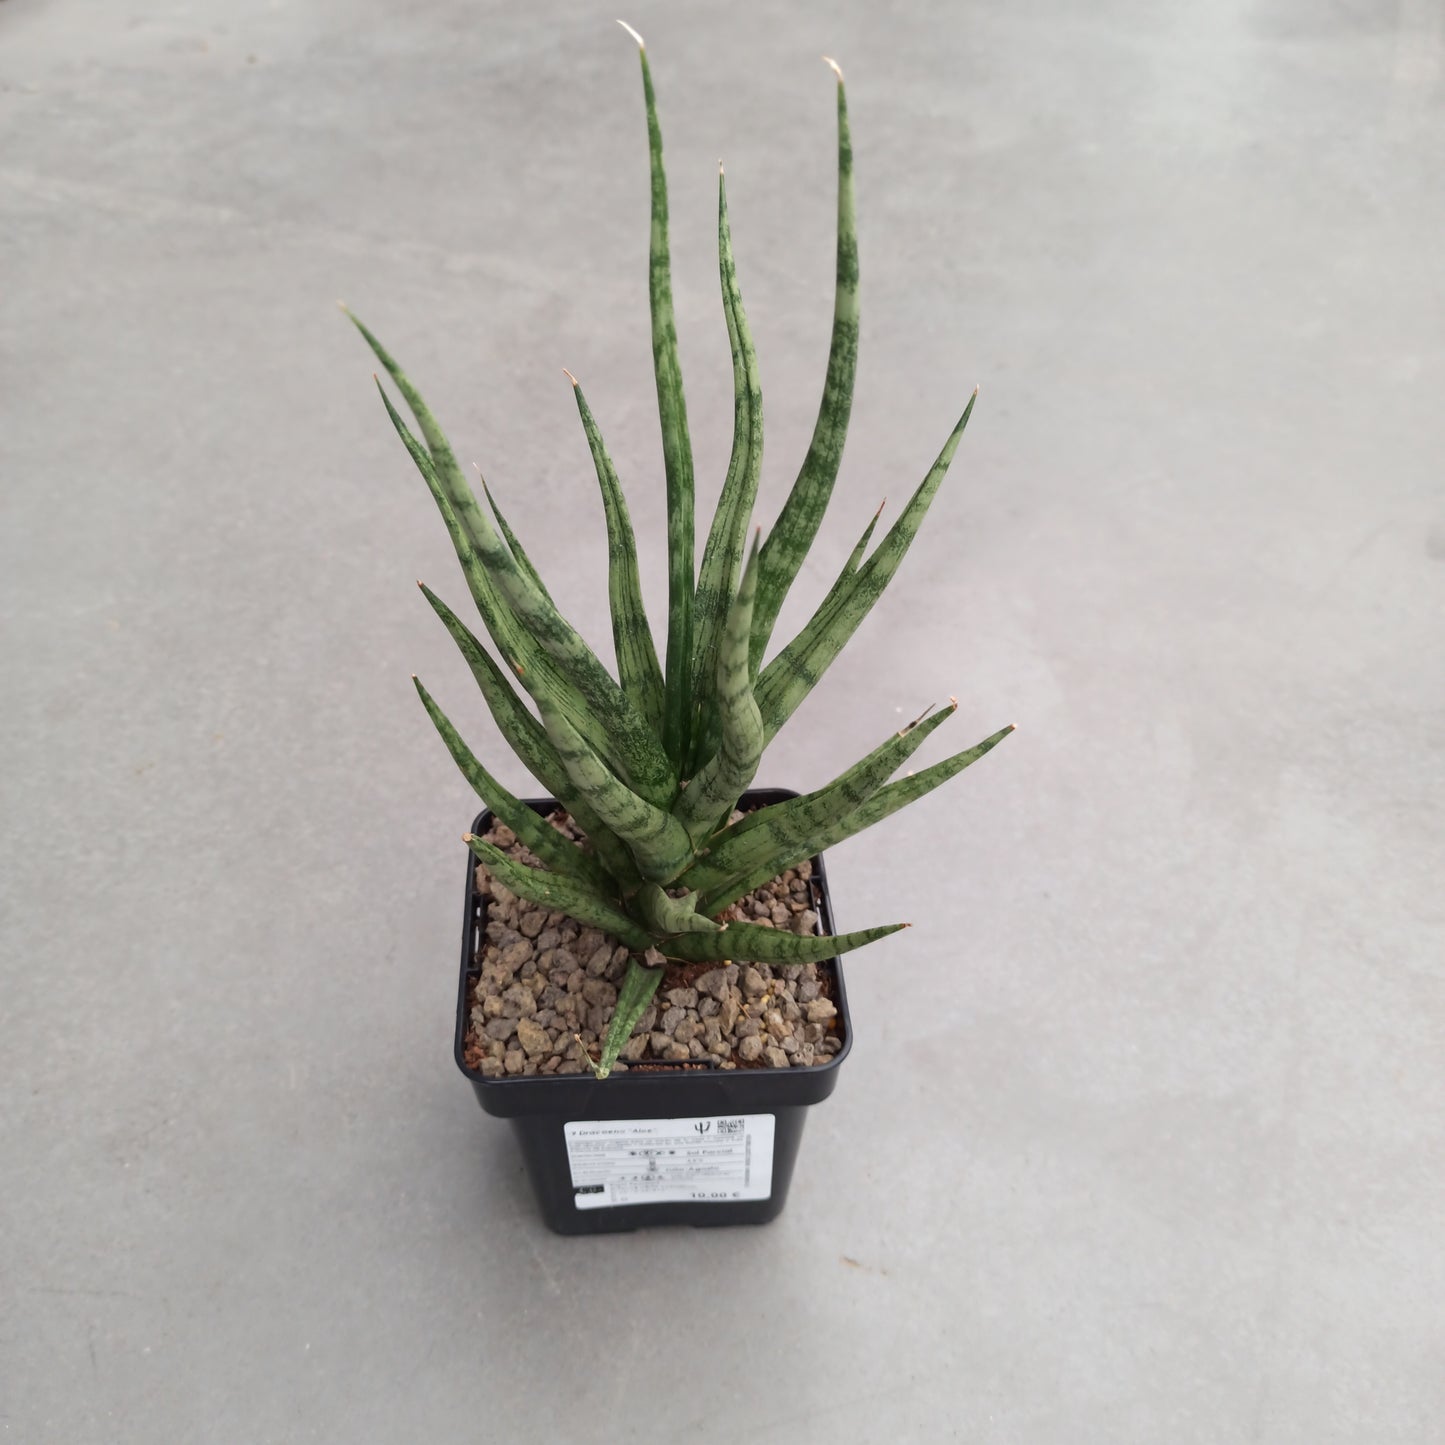 Dracaena (Sansevieria) 'Aloe' 'S' y 'M'